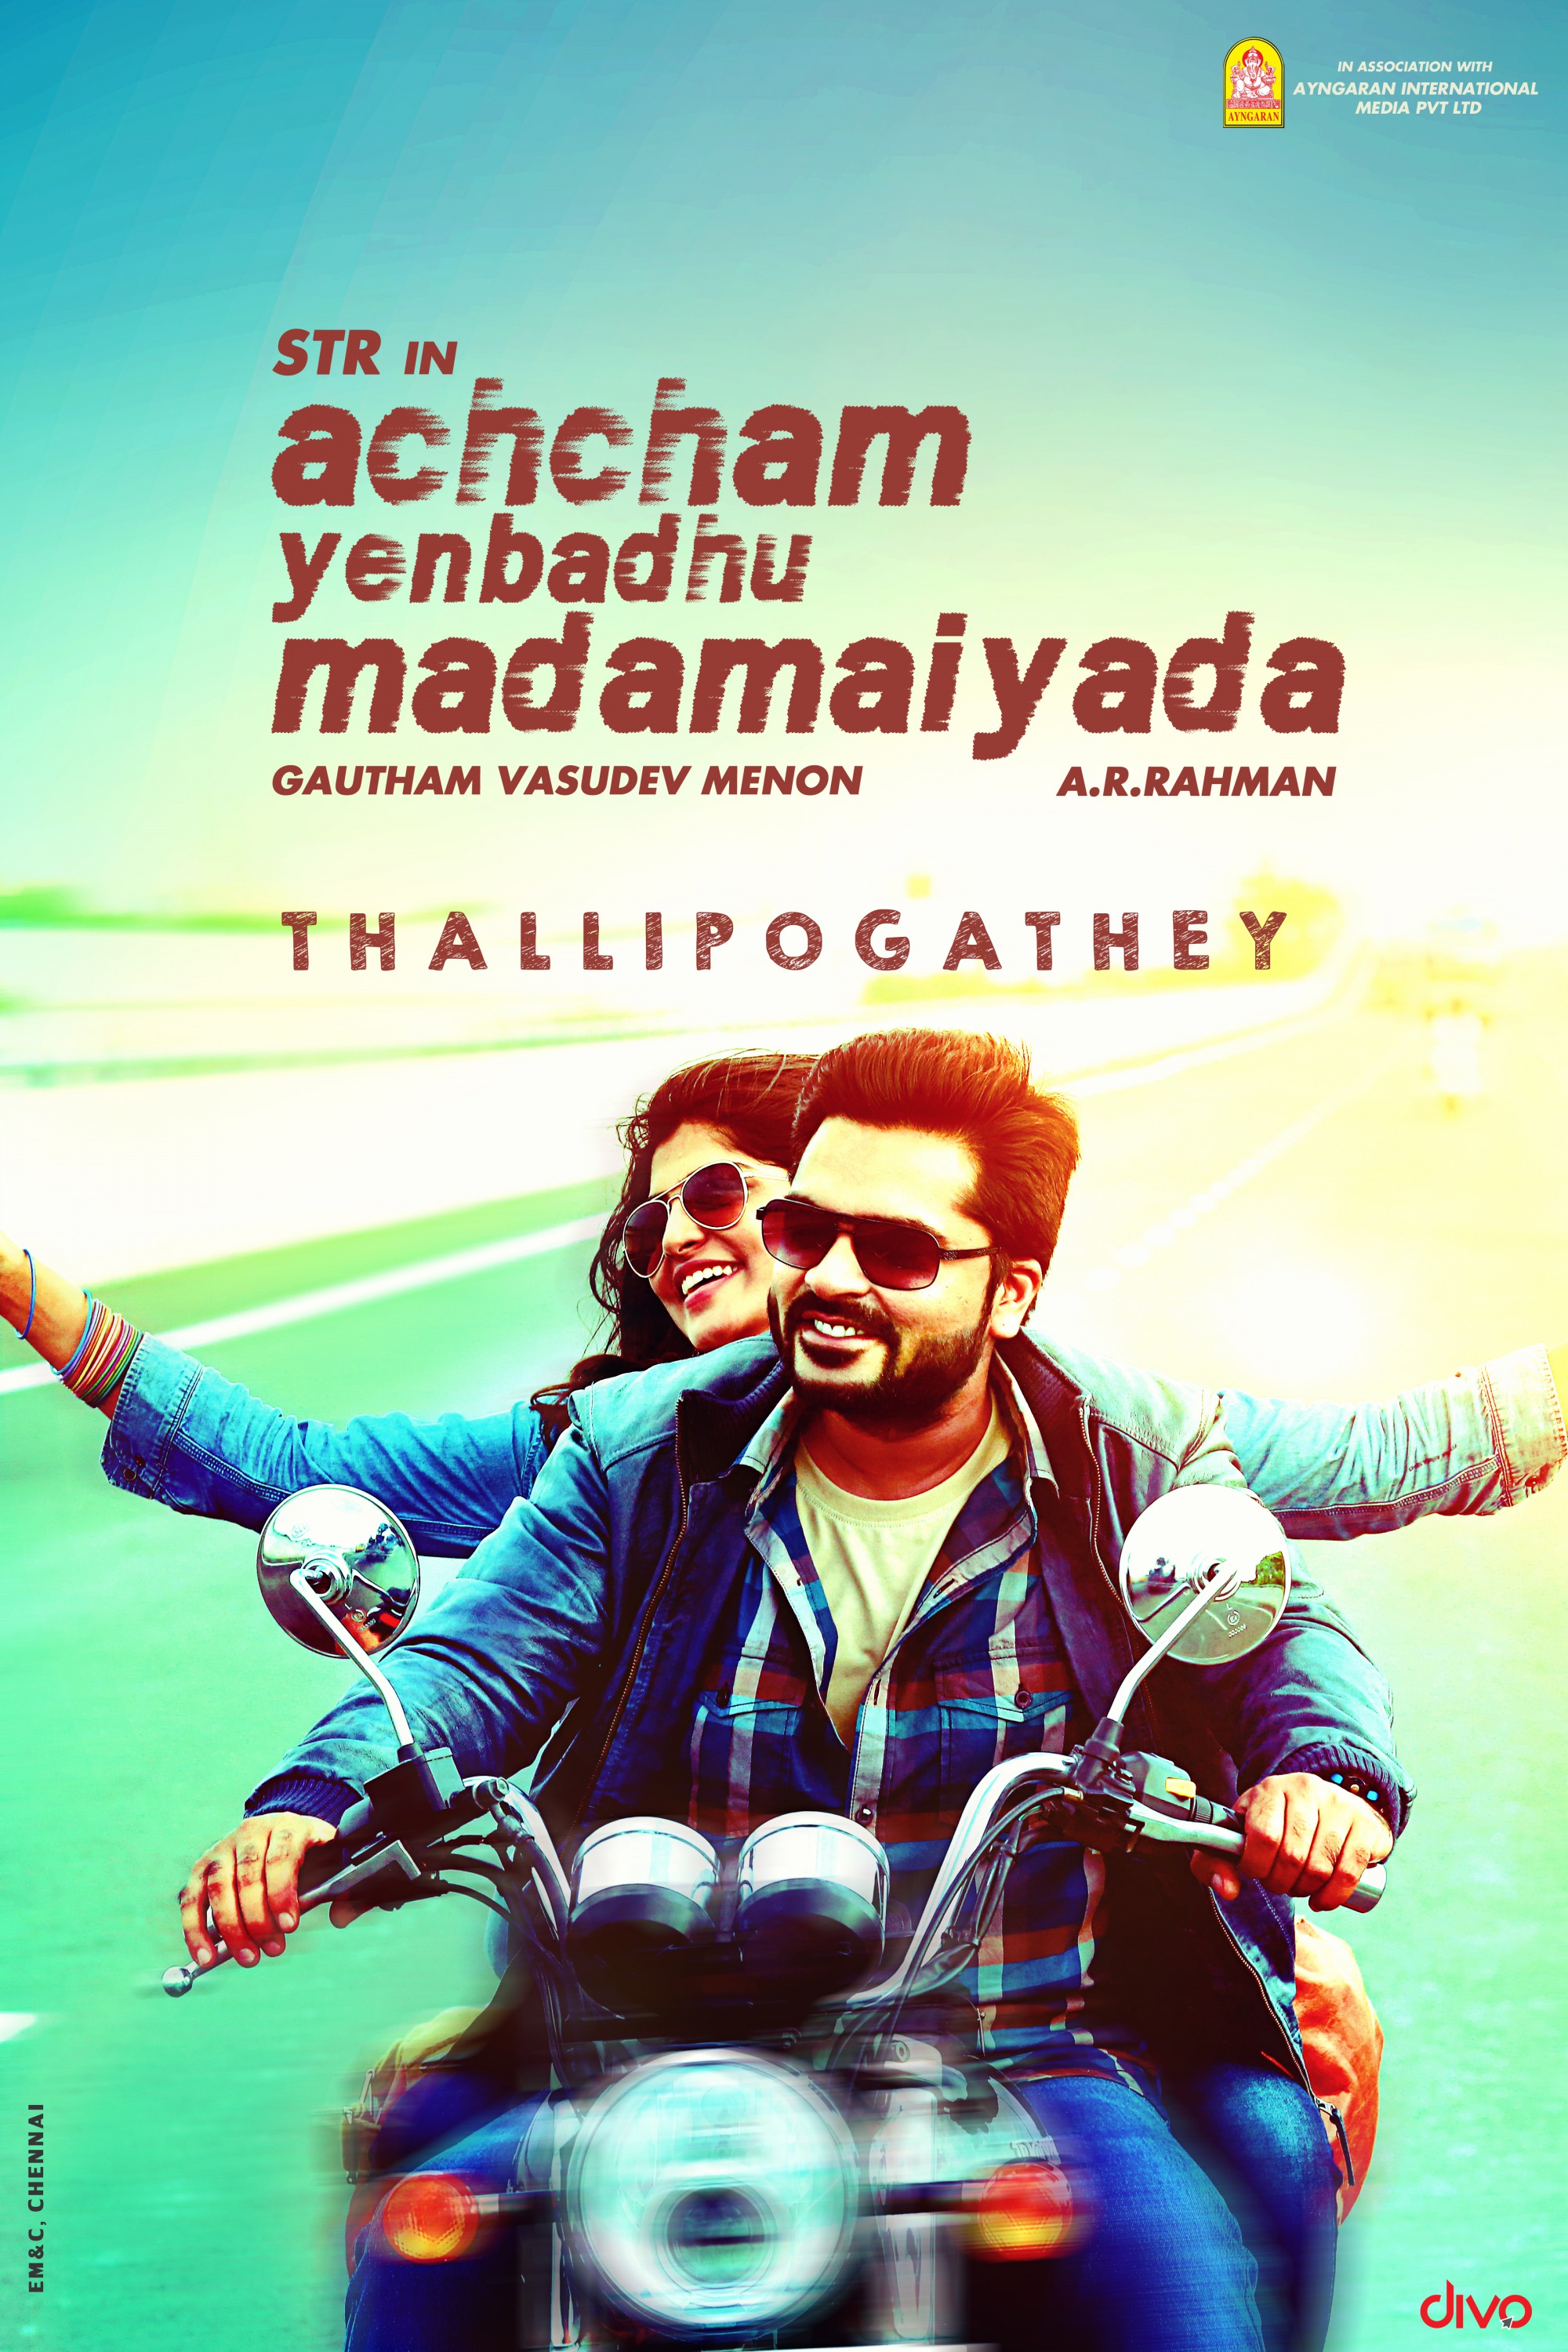 Mega Sized Movie Poster Image for Achcham Yenbadhu Madamaiyada (#1 of 3)